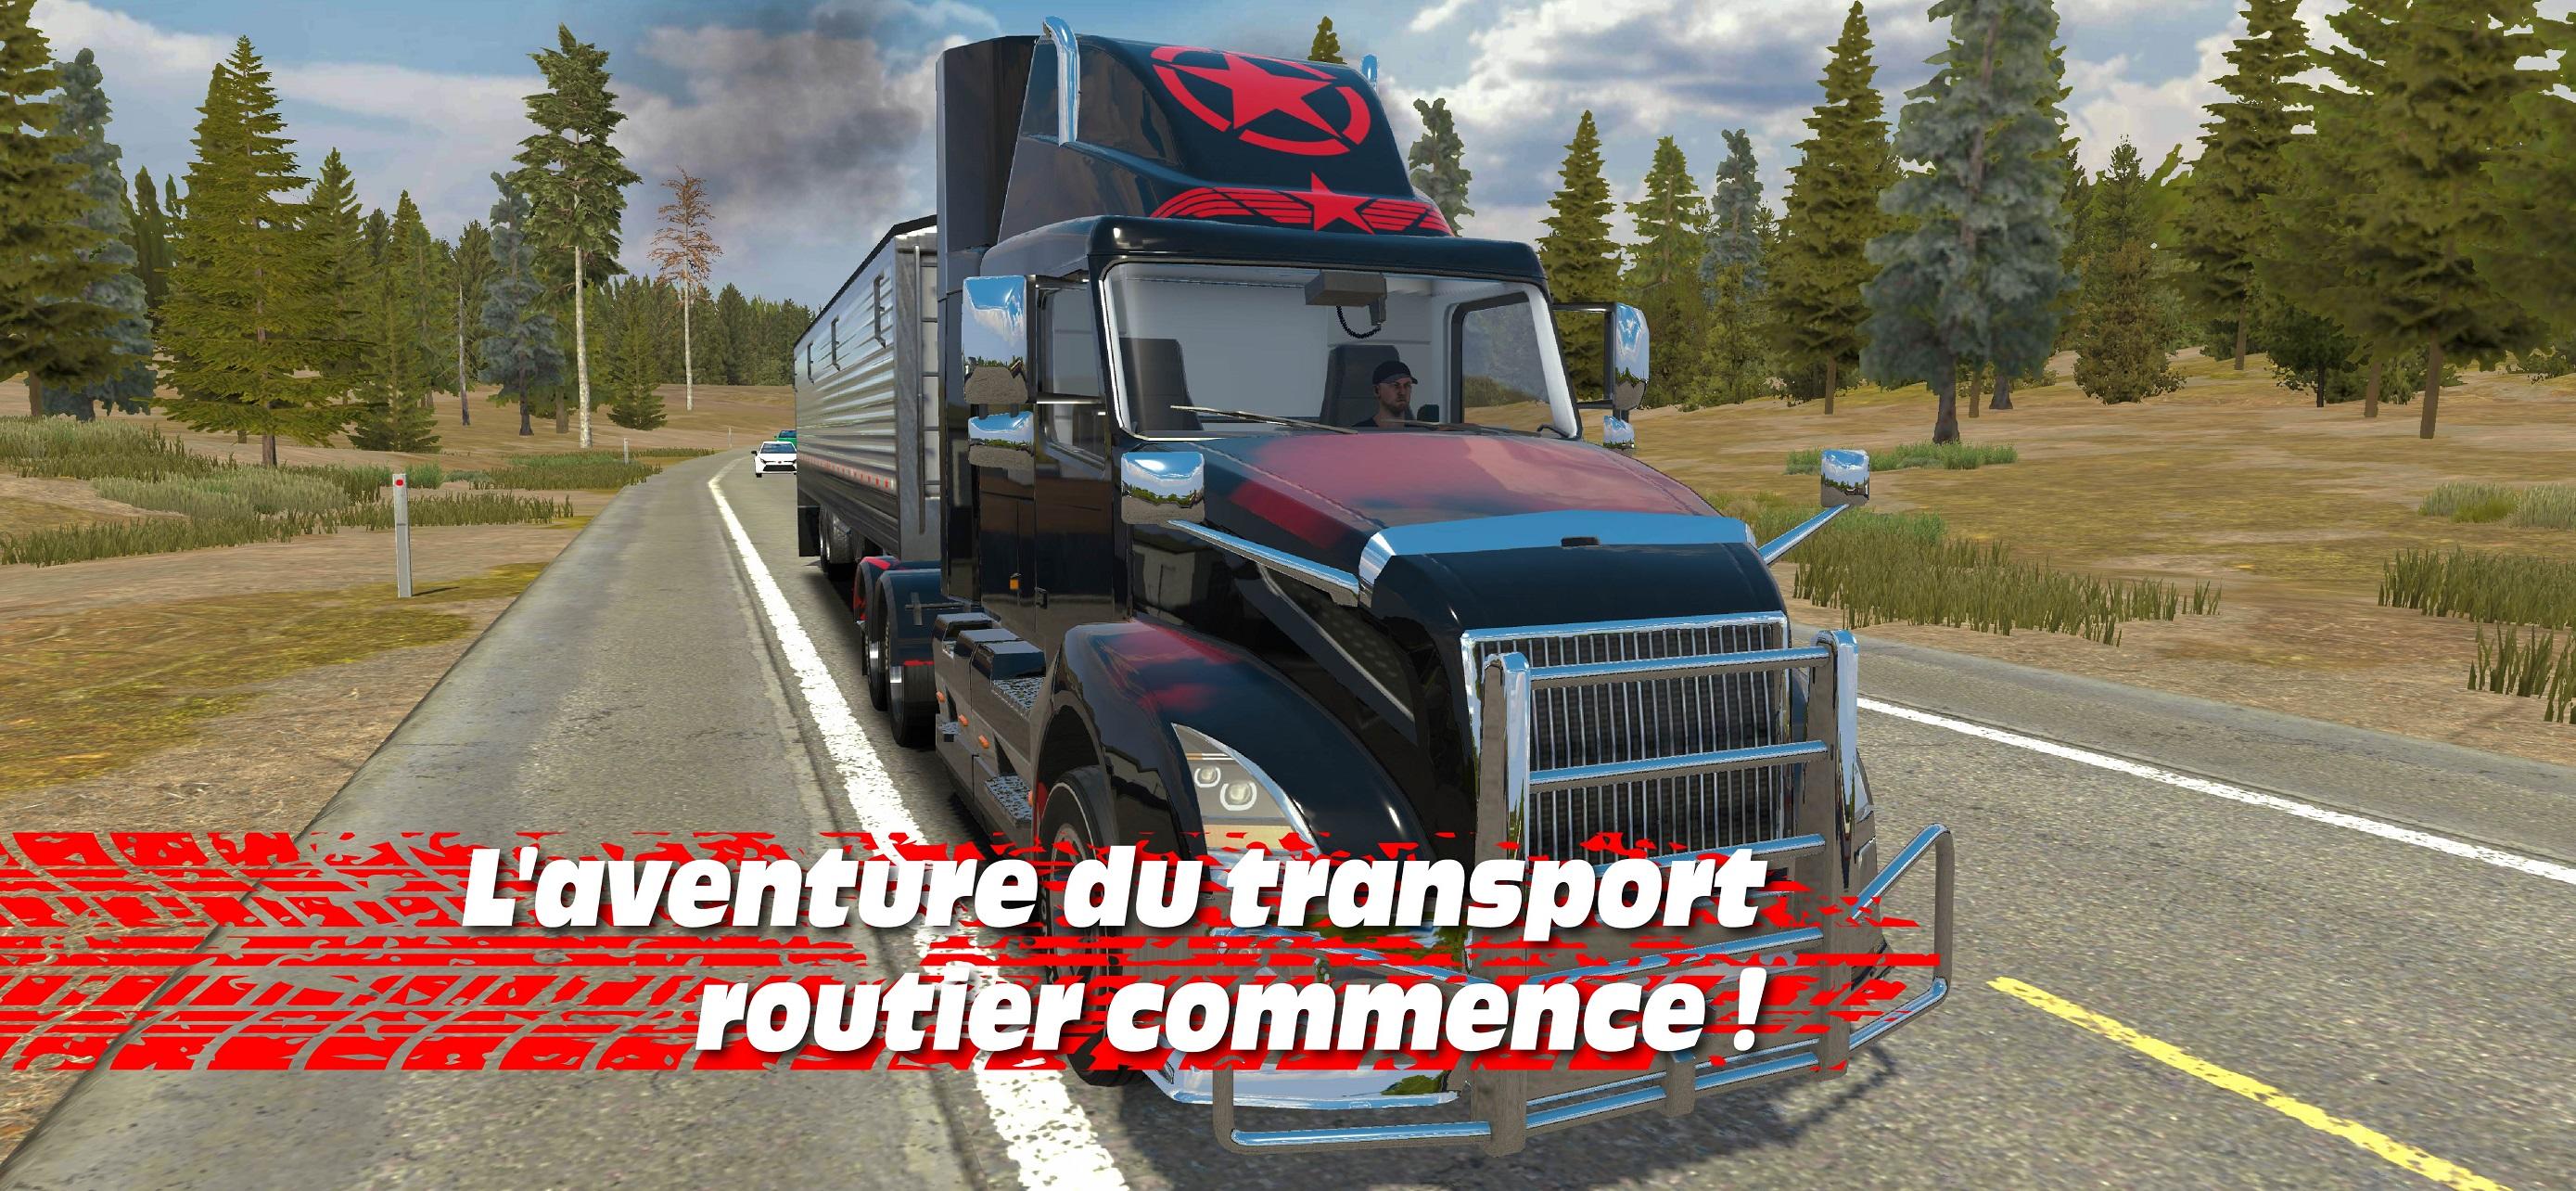 Screenshot 1 of Truck Simulator PRO 3 1.29